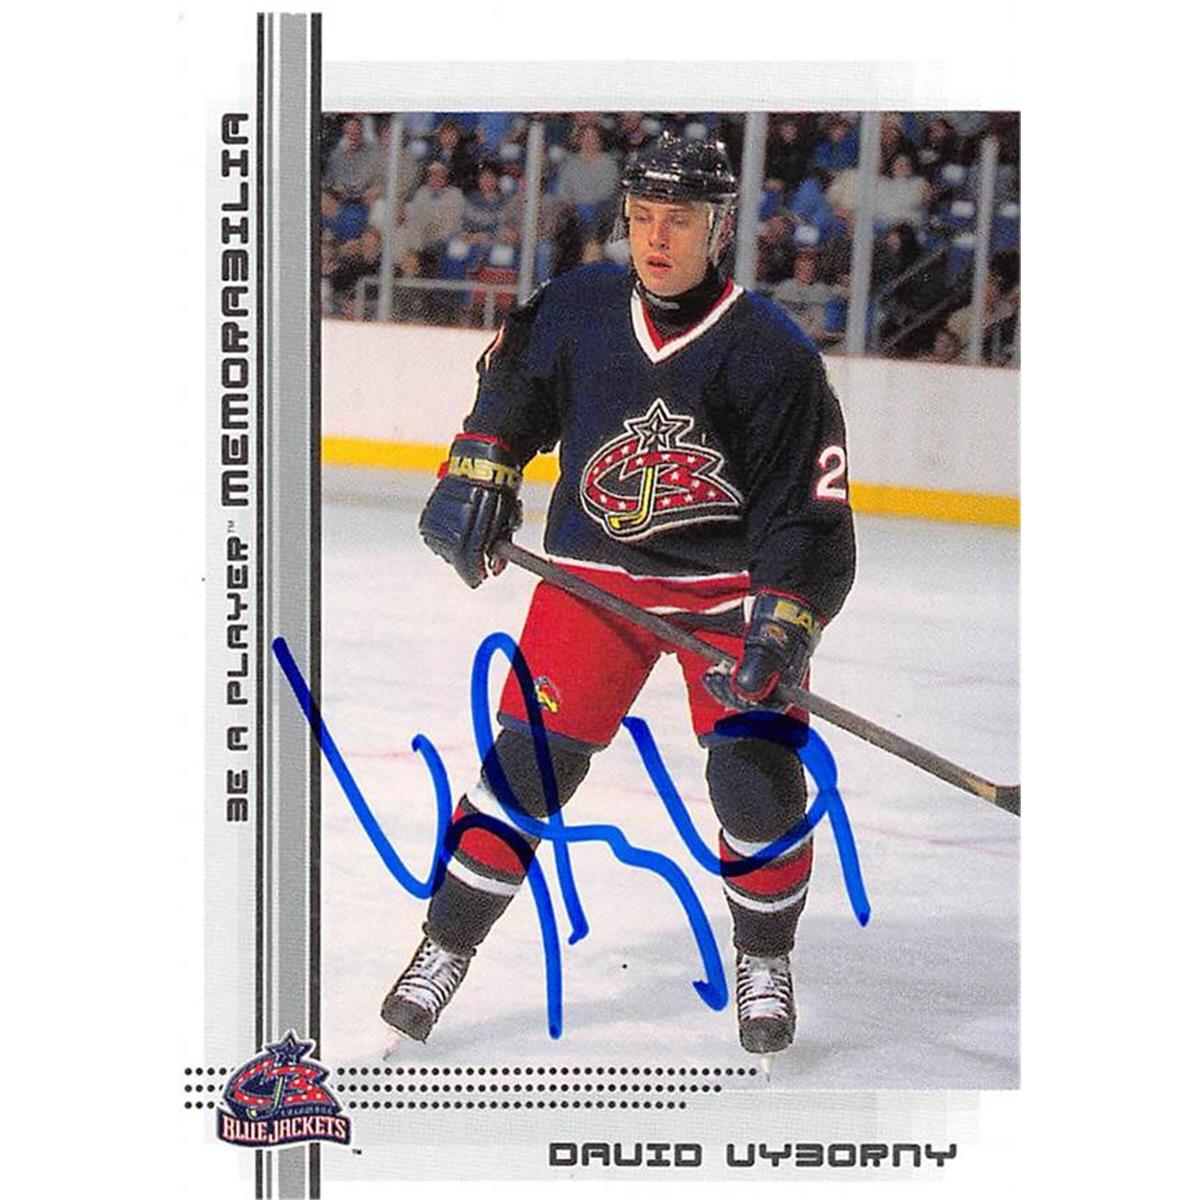 Picture of Autograph Warehouse 466105 David Vyborny Autographed Columbus Blue Jackets Hockey Card 2000 BAP No. 410